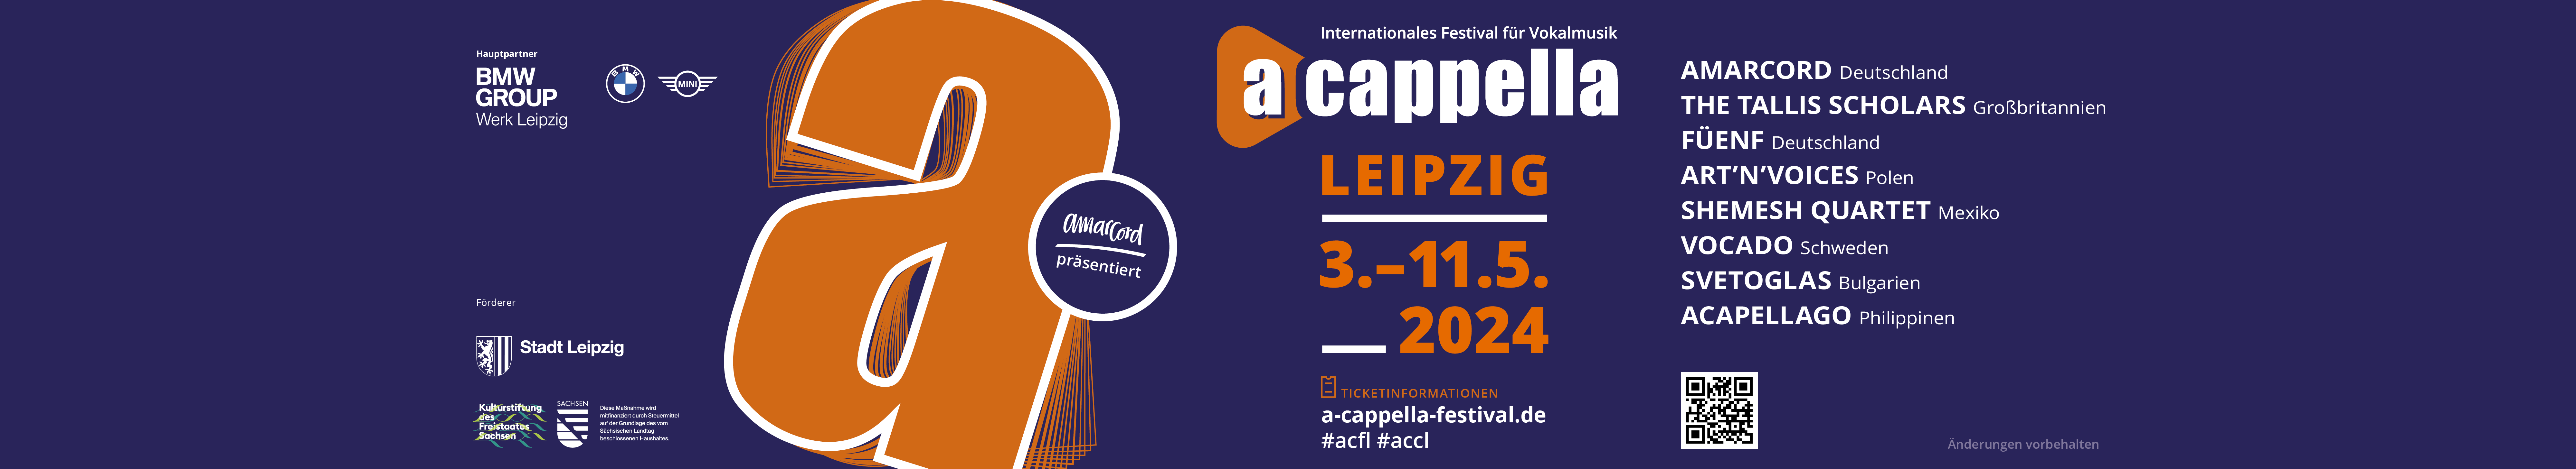 Internationales Festival für Vokalmusik »a cappella« Leipzig